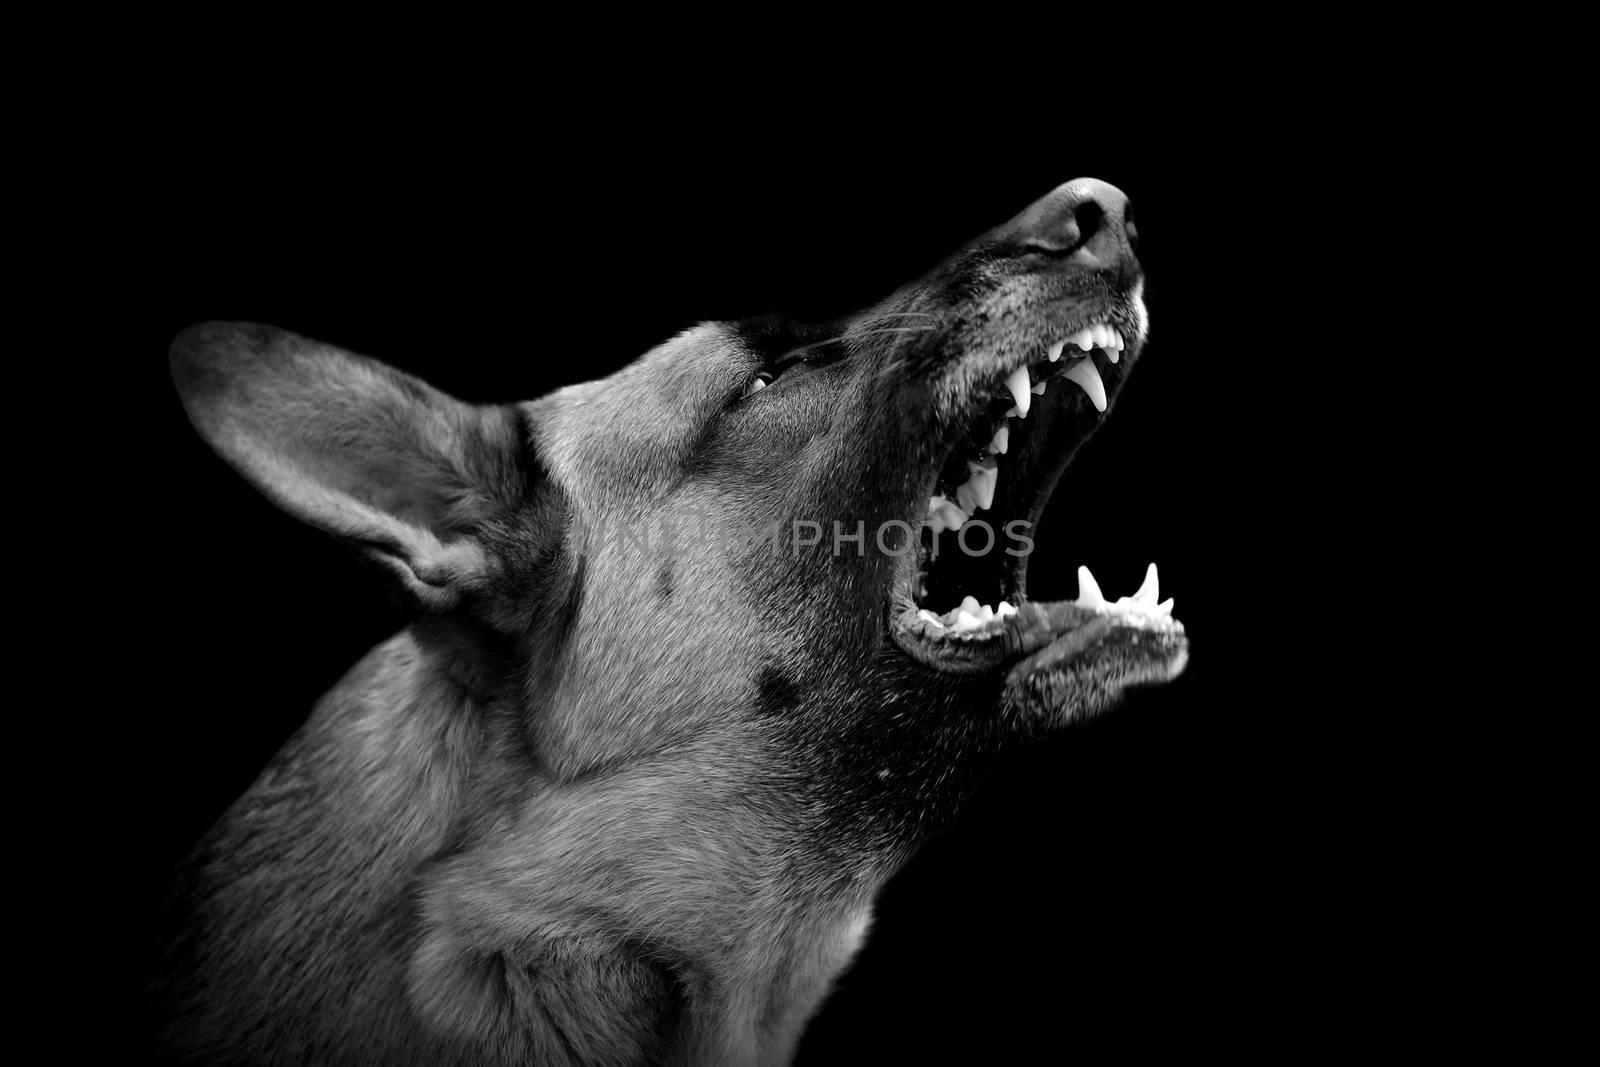 Angry dog on dark background. Black and white image